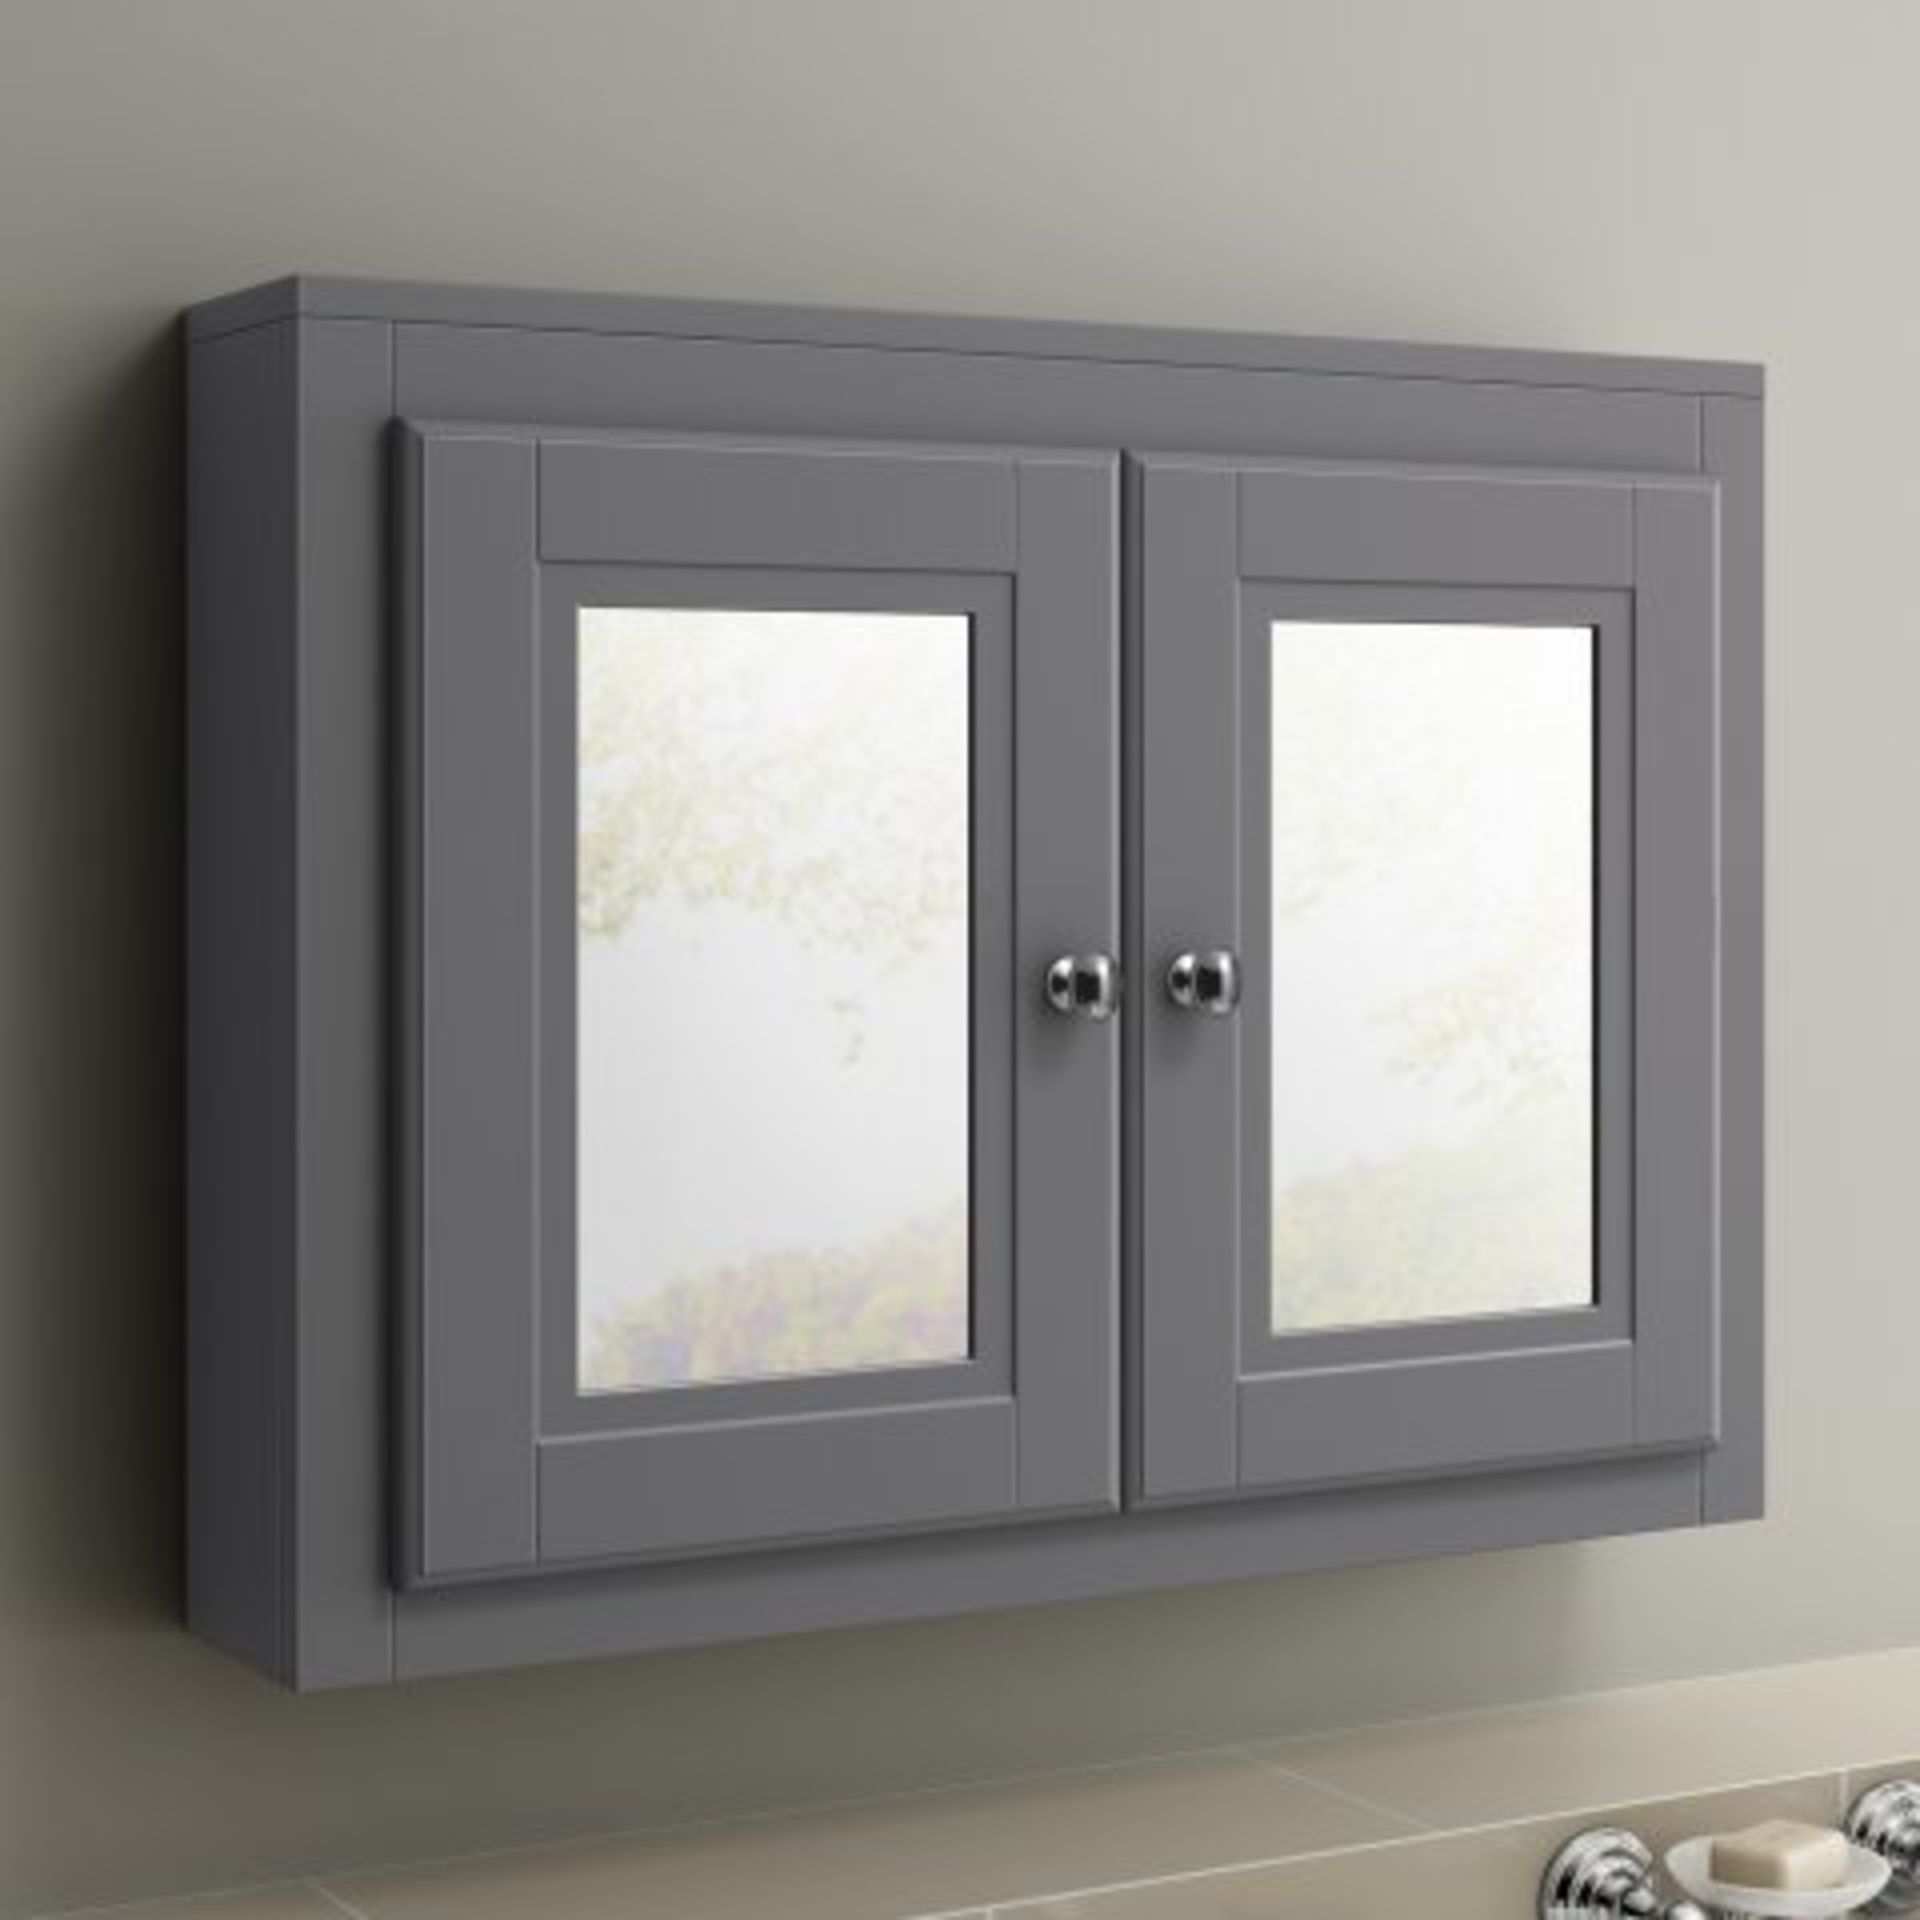 (I13) 800mm Cambridge Midnight Grey Double Door Mirror Cabinet. RRP £299.99. Our Cambridge